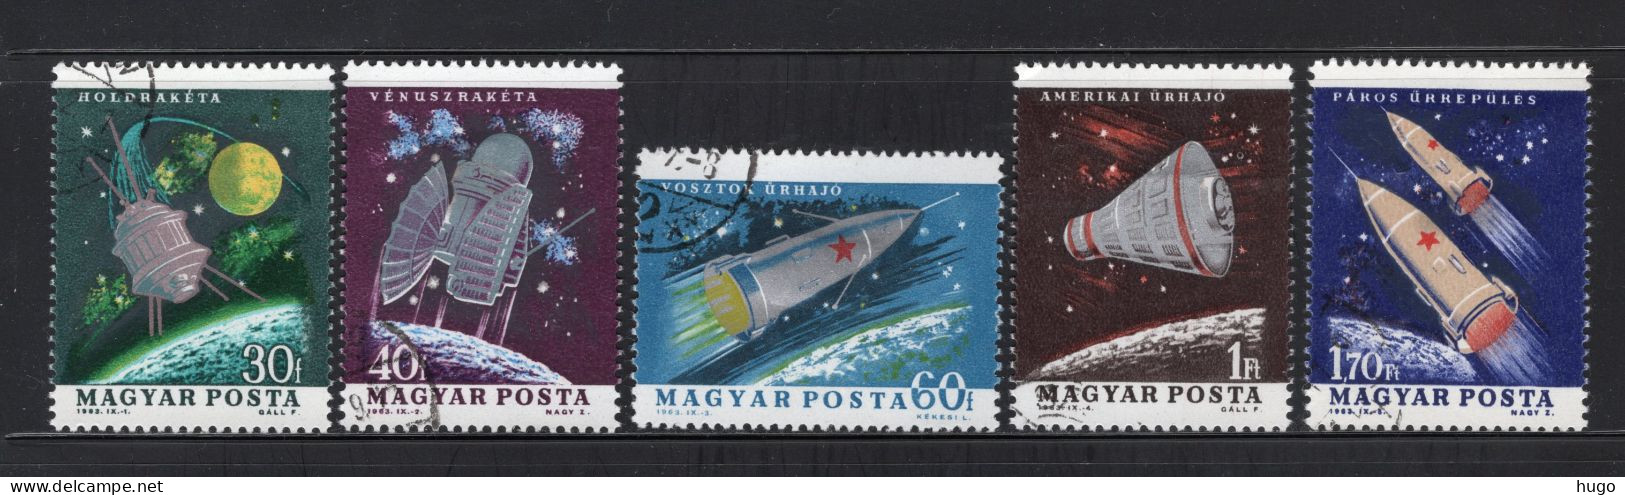 HONGARIJE Yt. 1622/1626° Gestempeld 1964 - Used Stamps